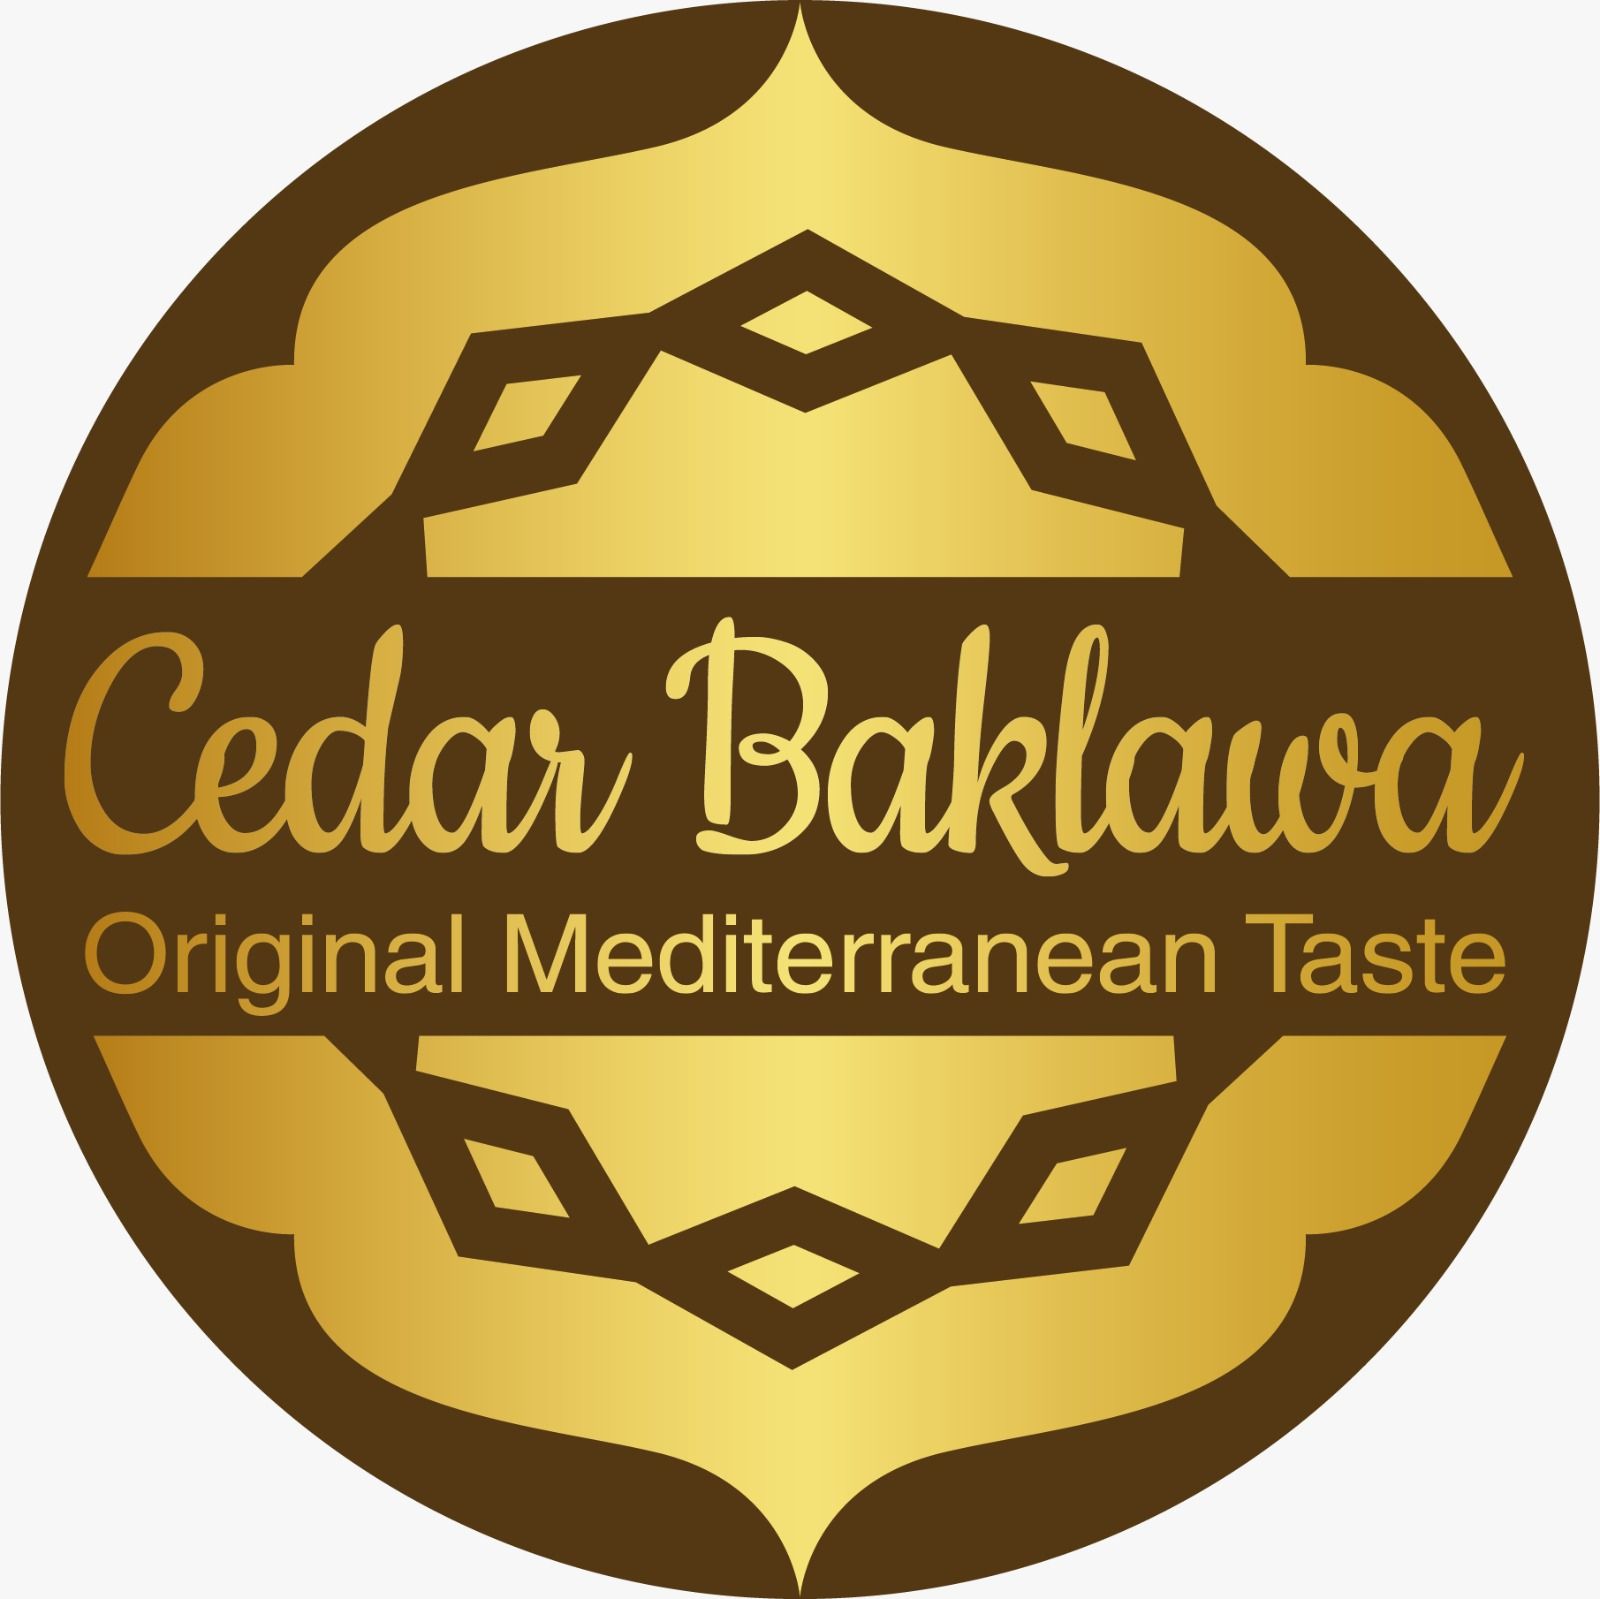 Cedar Baklawa